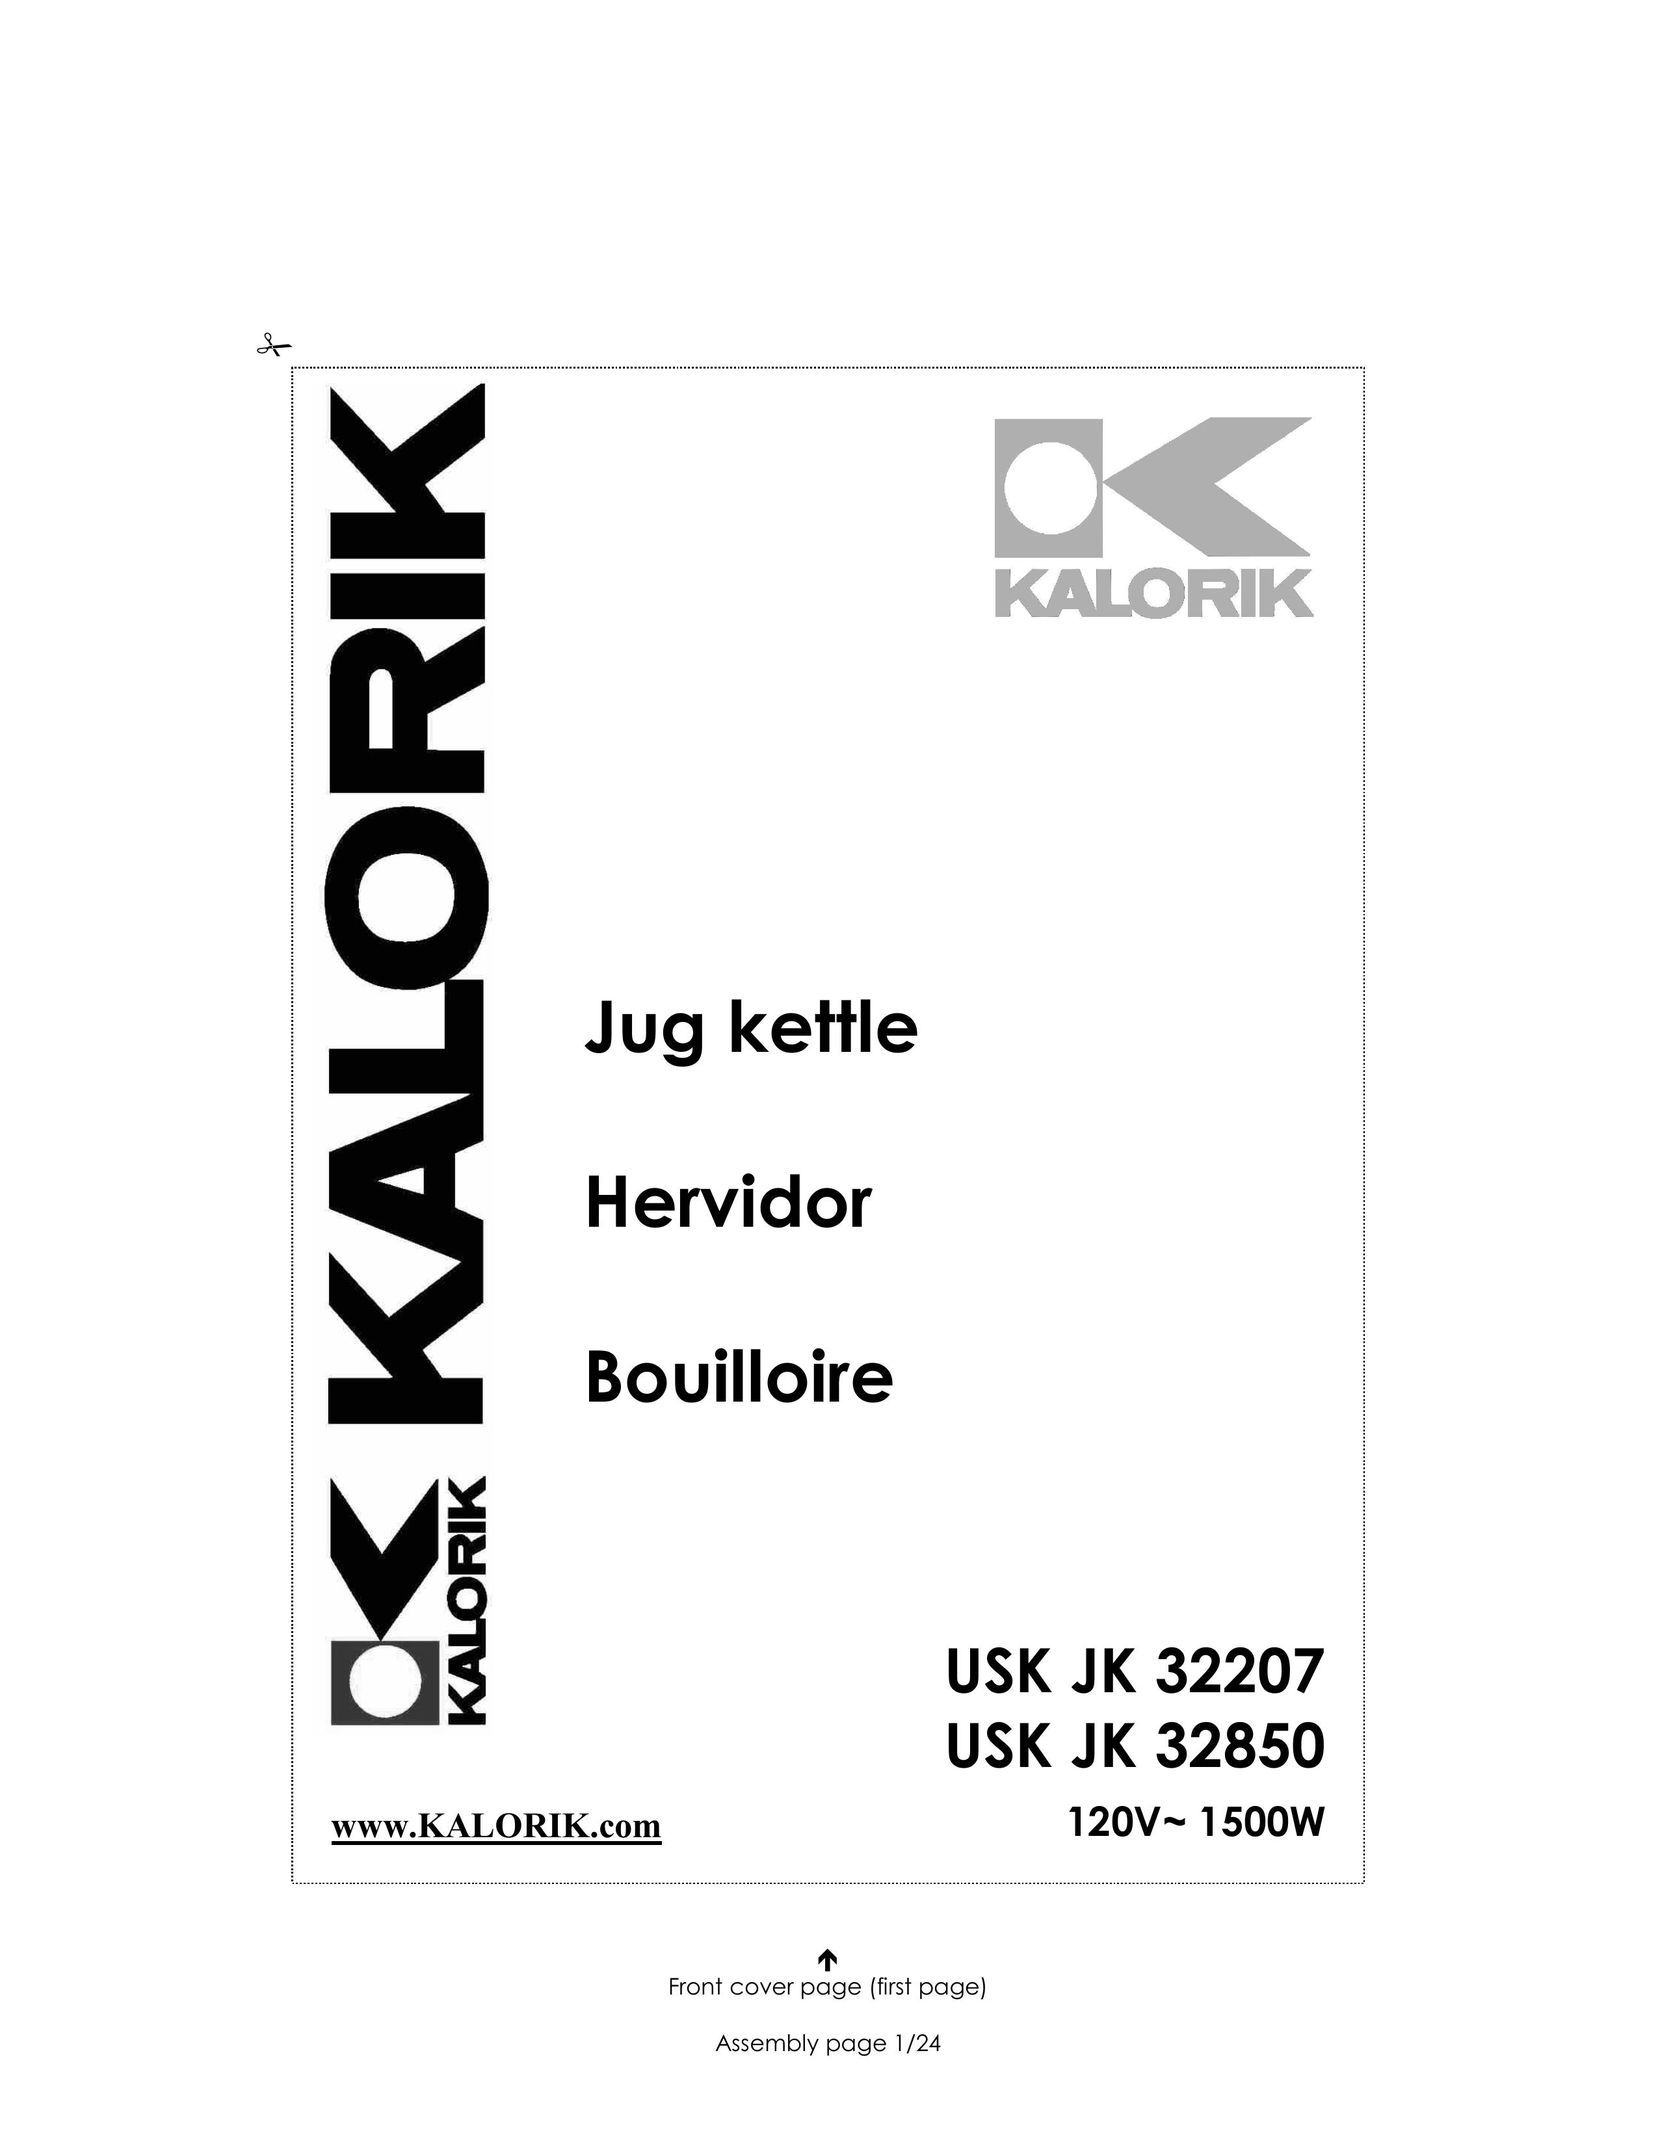 Kalorik USK JK 32850 Water Heater User Manual